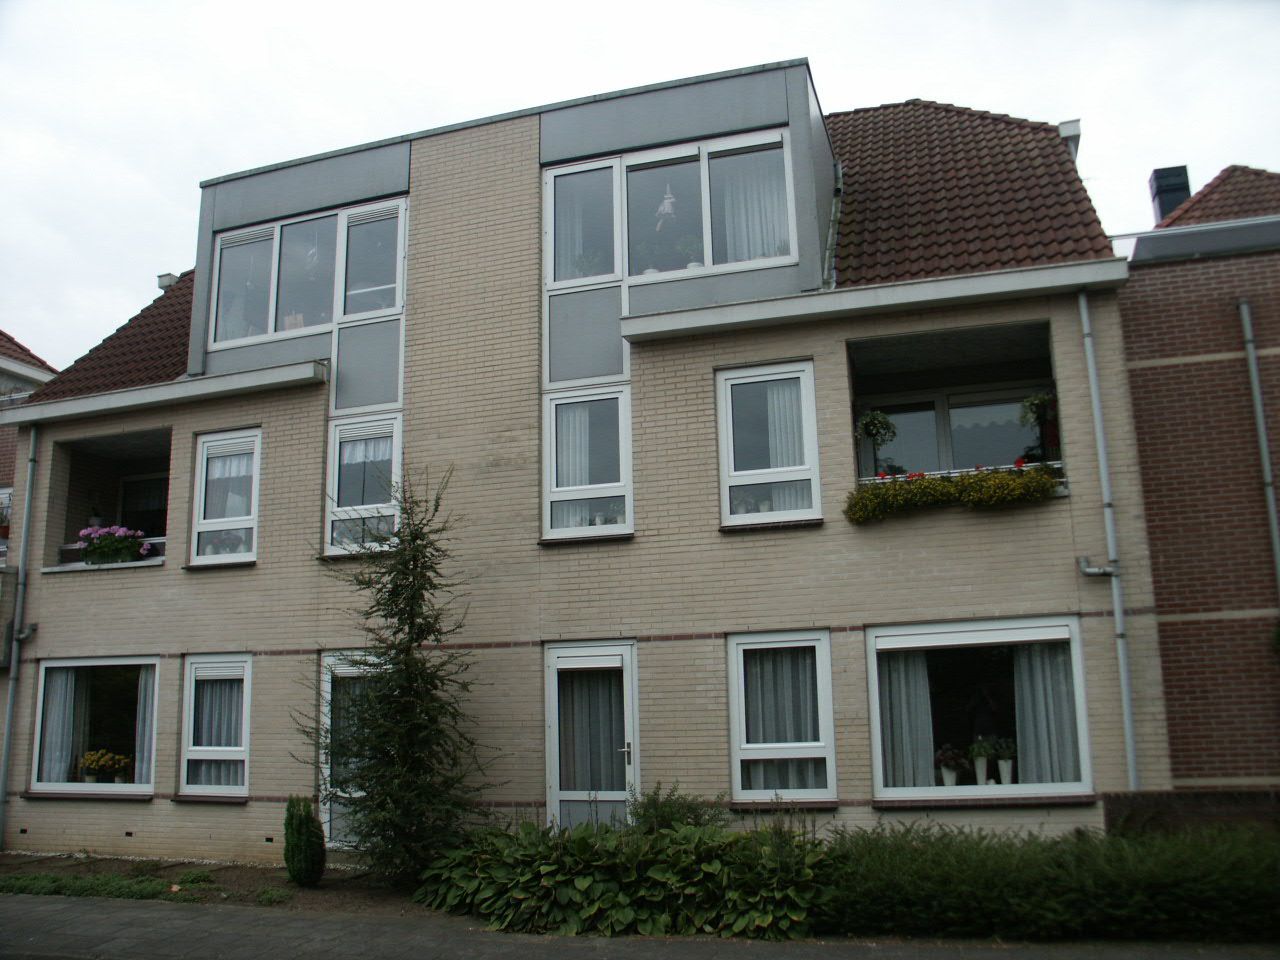 Burgemeester Bloemersstraat 9, 7271 DD Borculo, Nederland